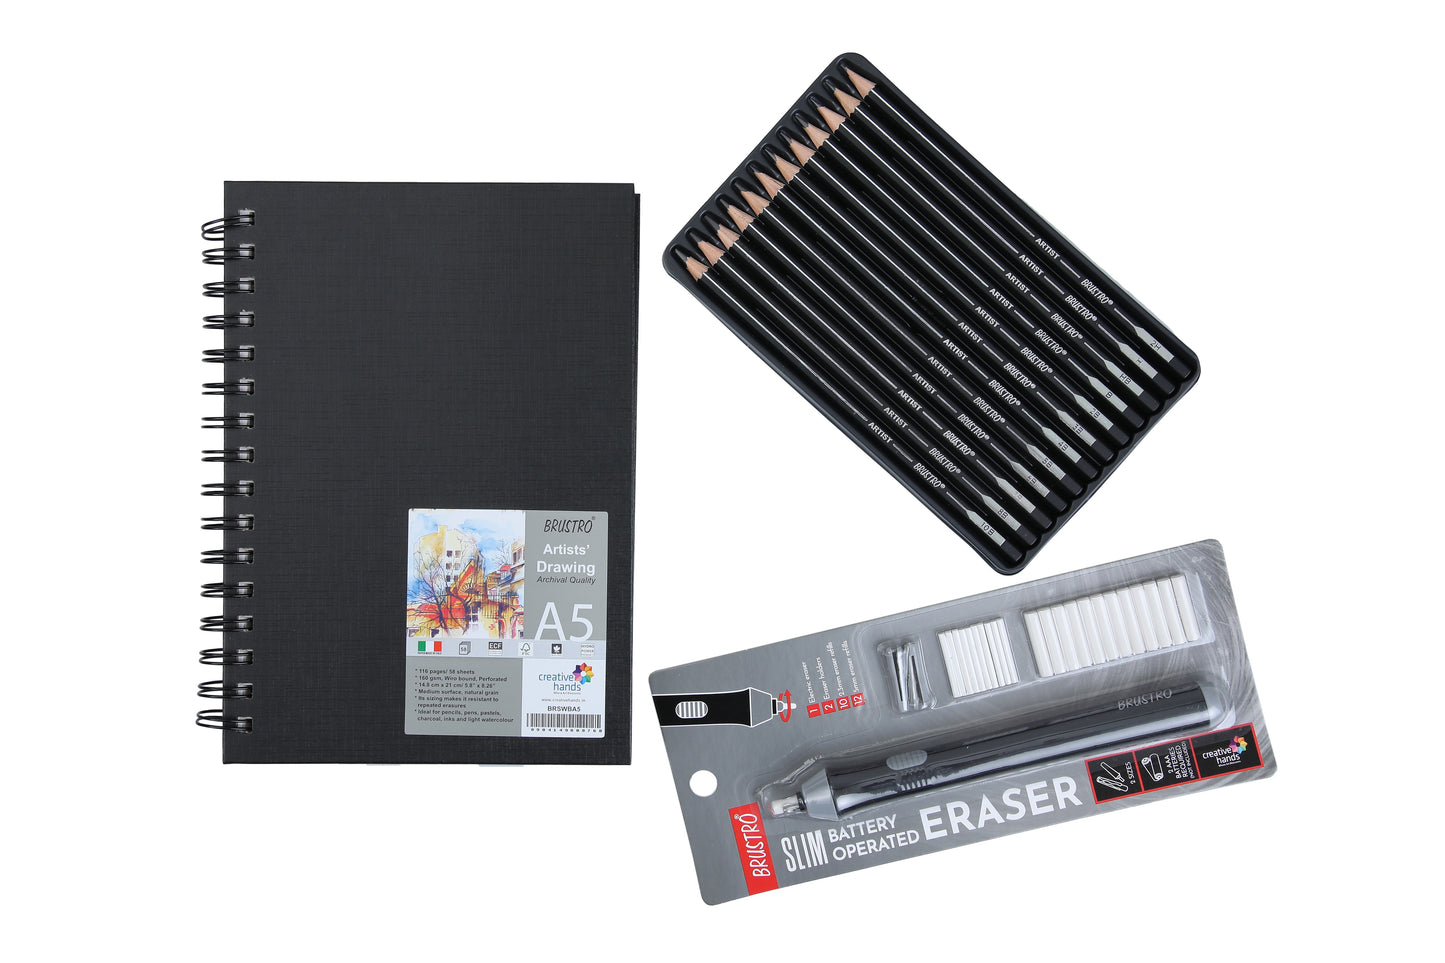 Brustro Slim Battery Operated Eraser + Graphite Pencil Set of 12 + A5 wiro Sketchbook